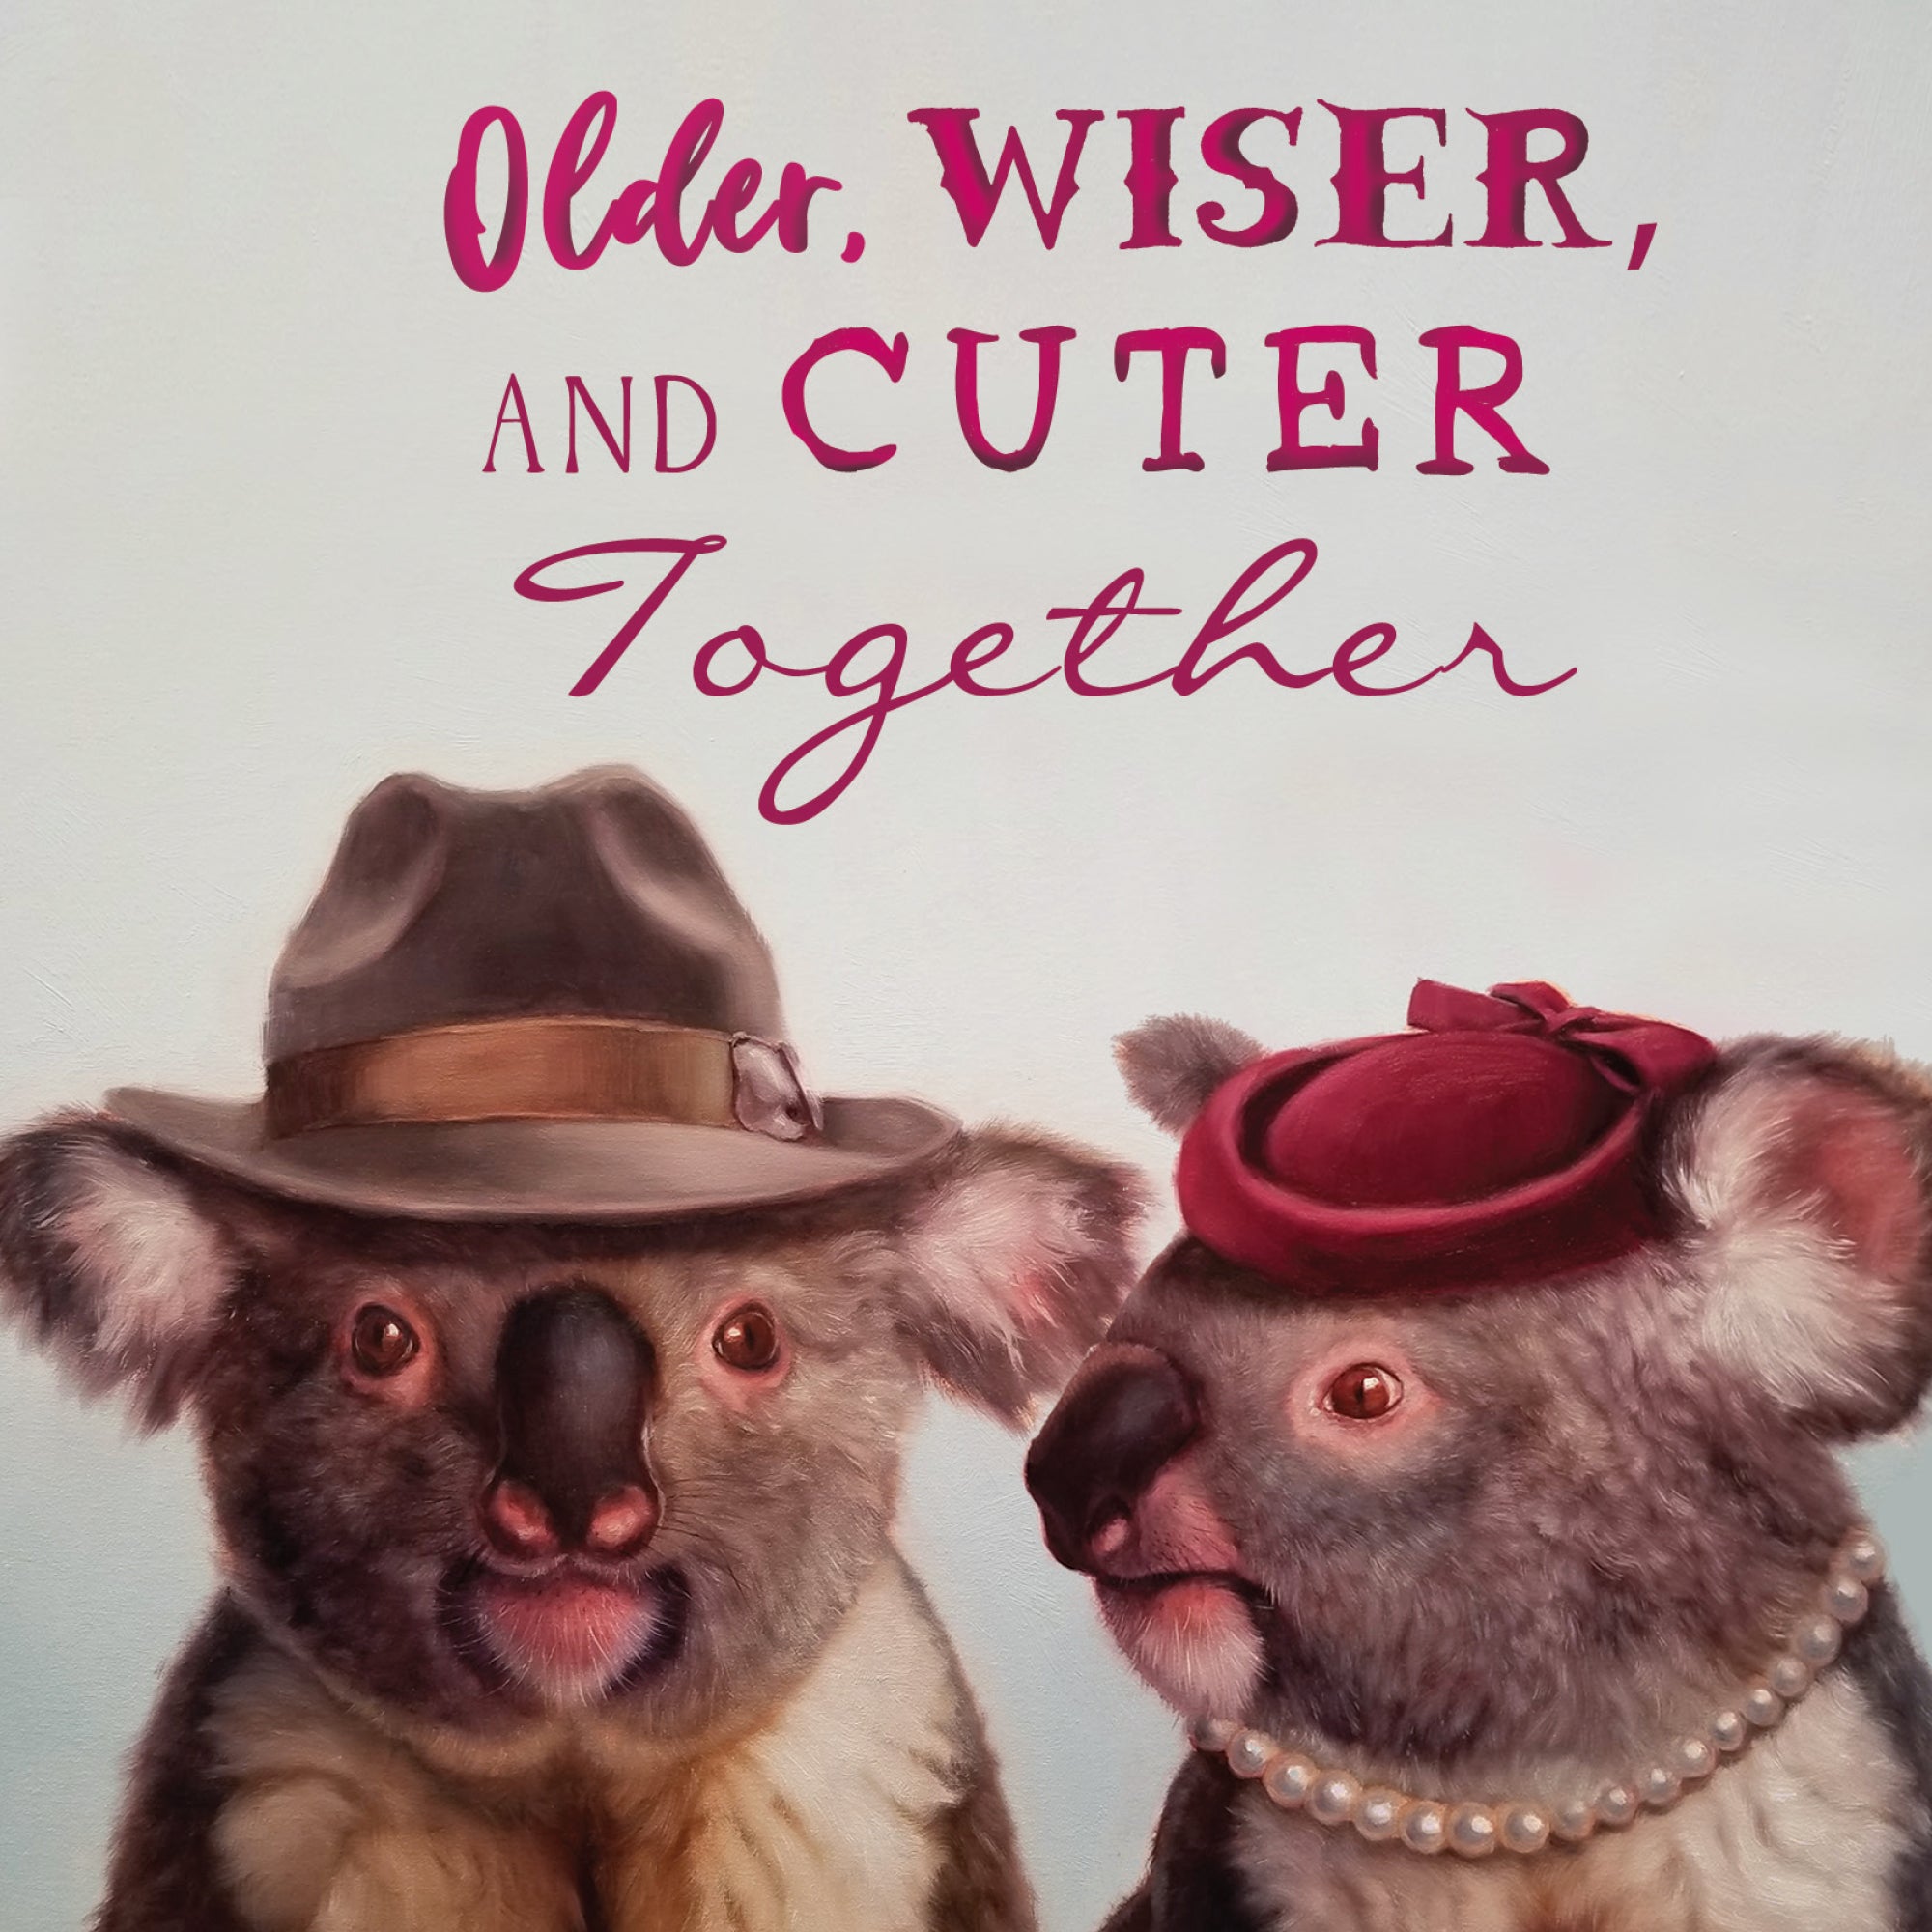 Greeting Card Older Wiser Cuter